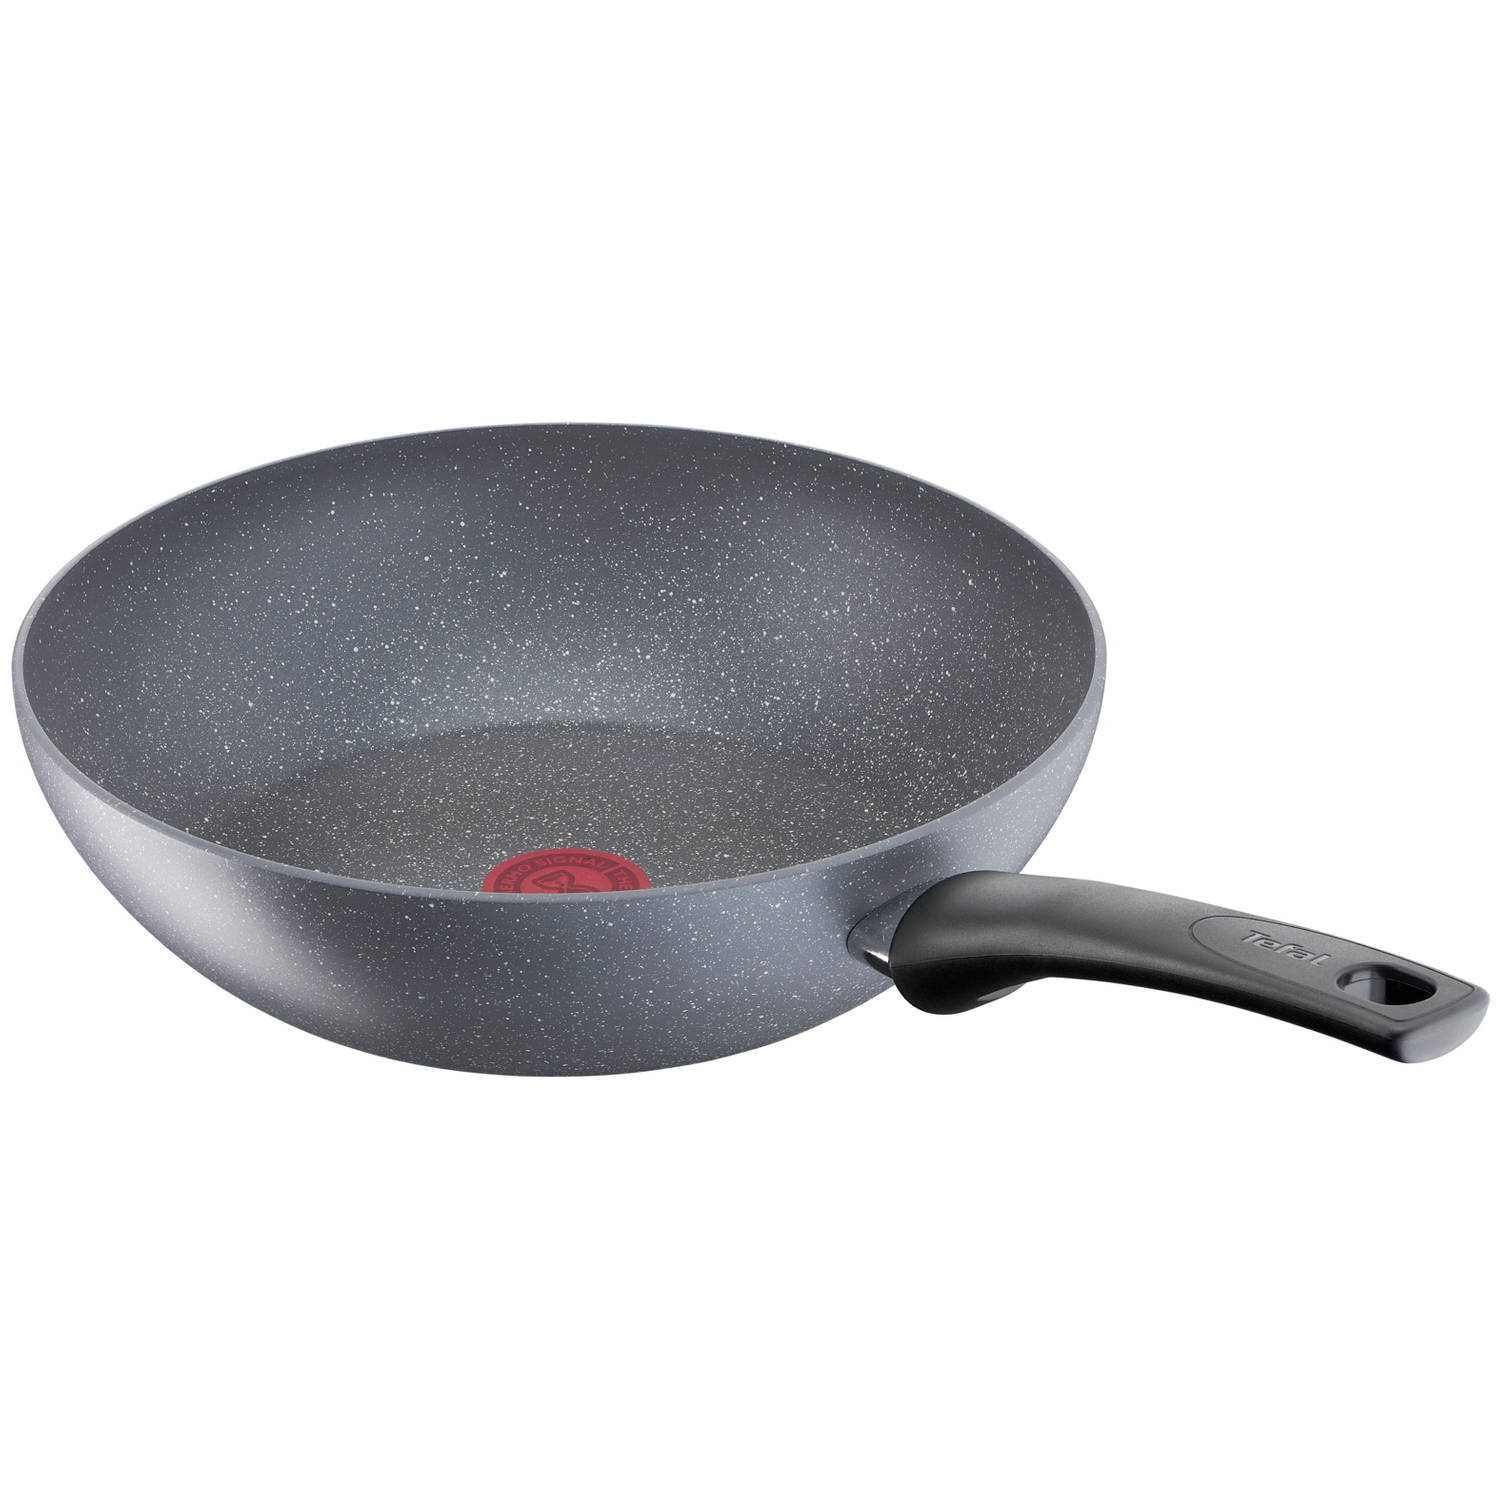 Chef cm 28 | Tefal - Blokker Healthy wokpan